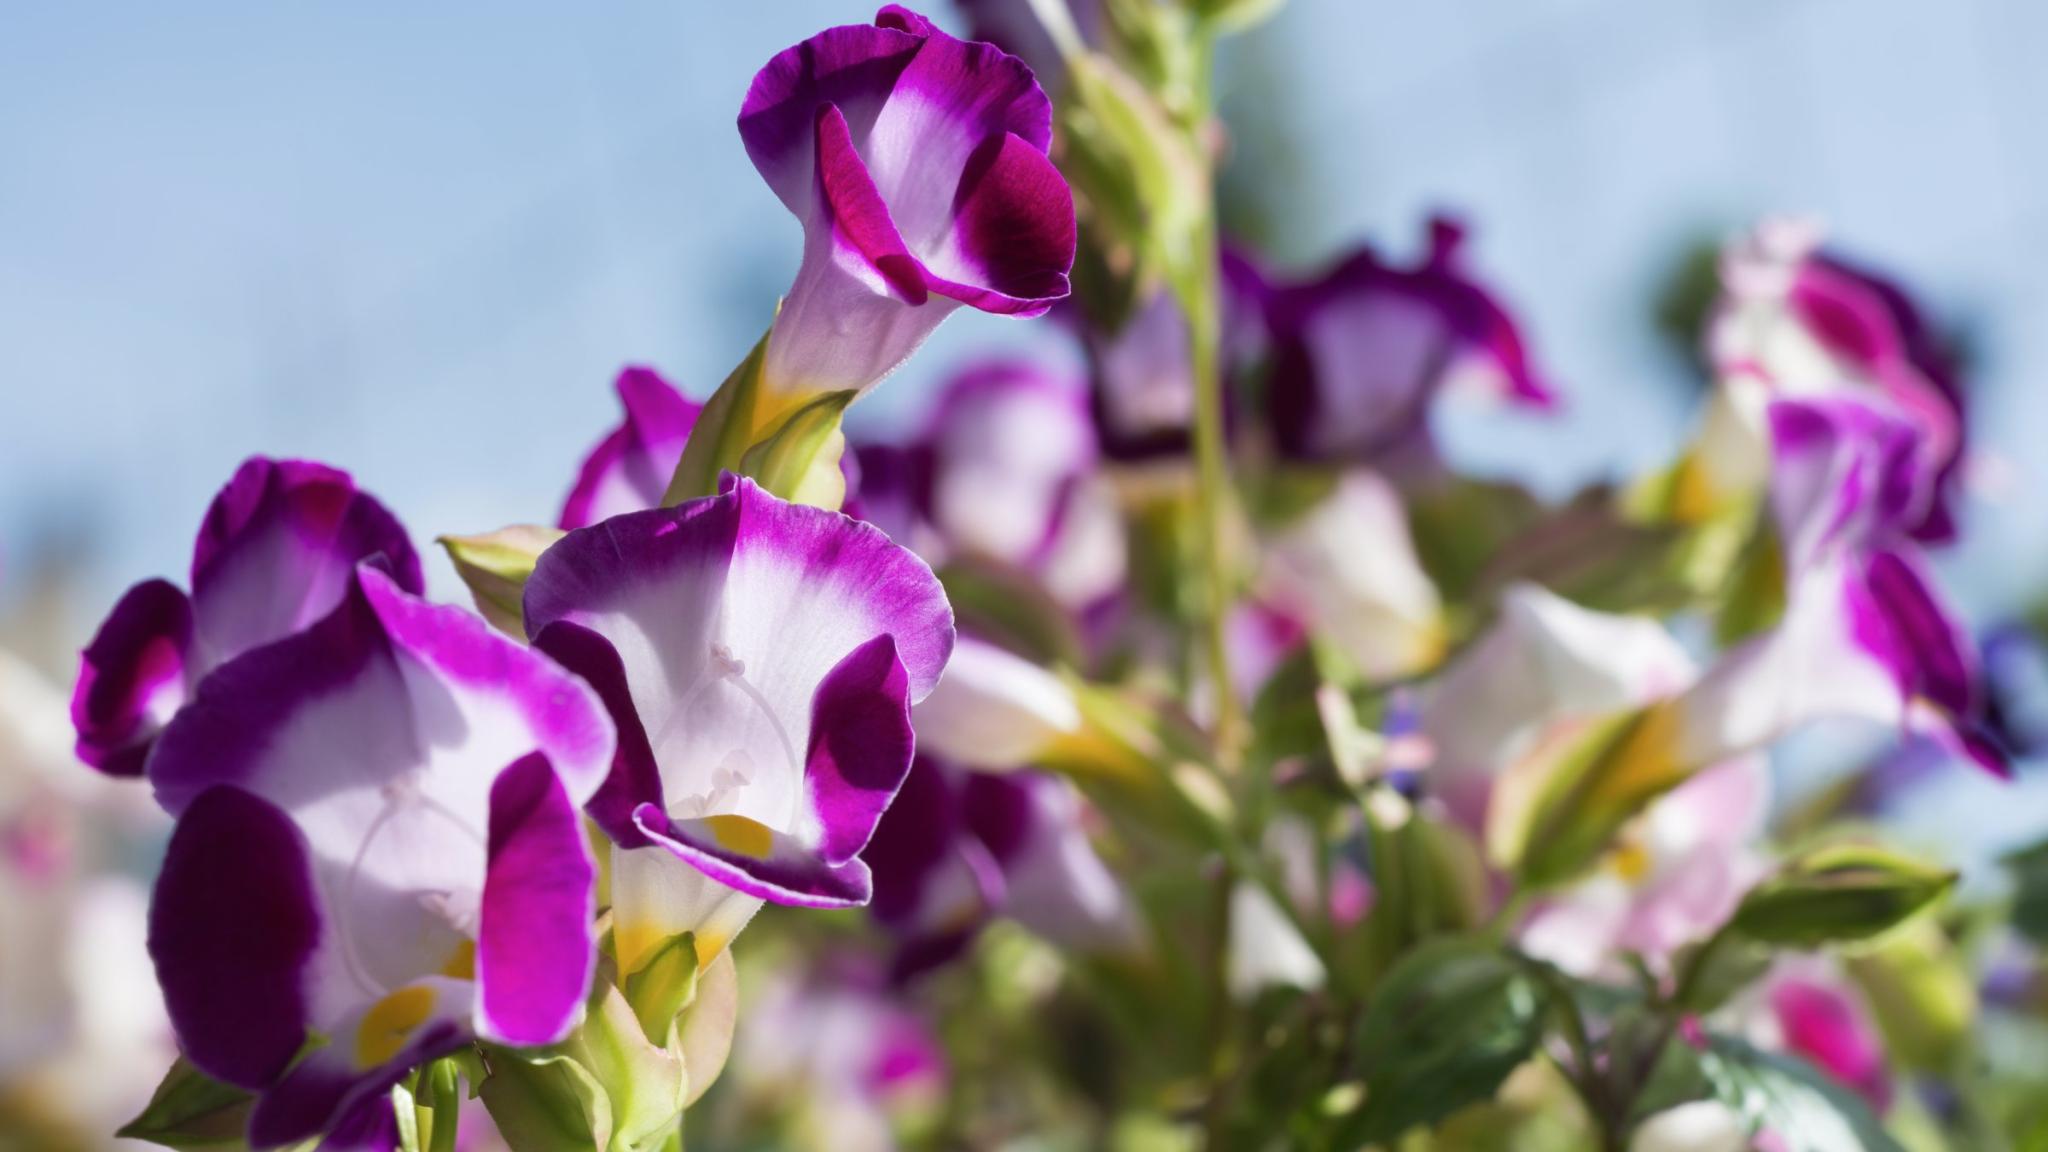 Close-up of beautiful purple Torenia fournieri or wishbone flowers in sunlight with a blurred background.